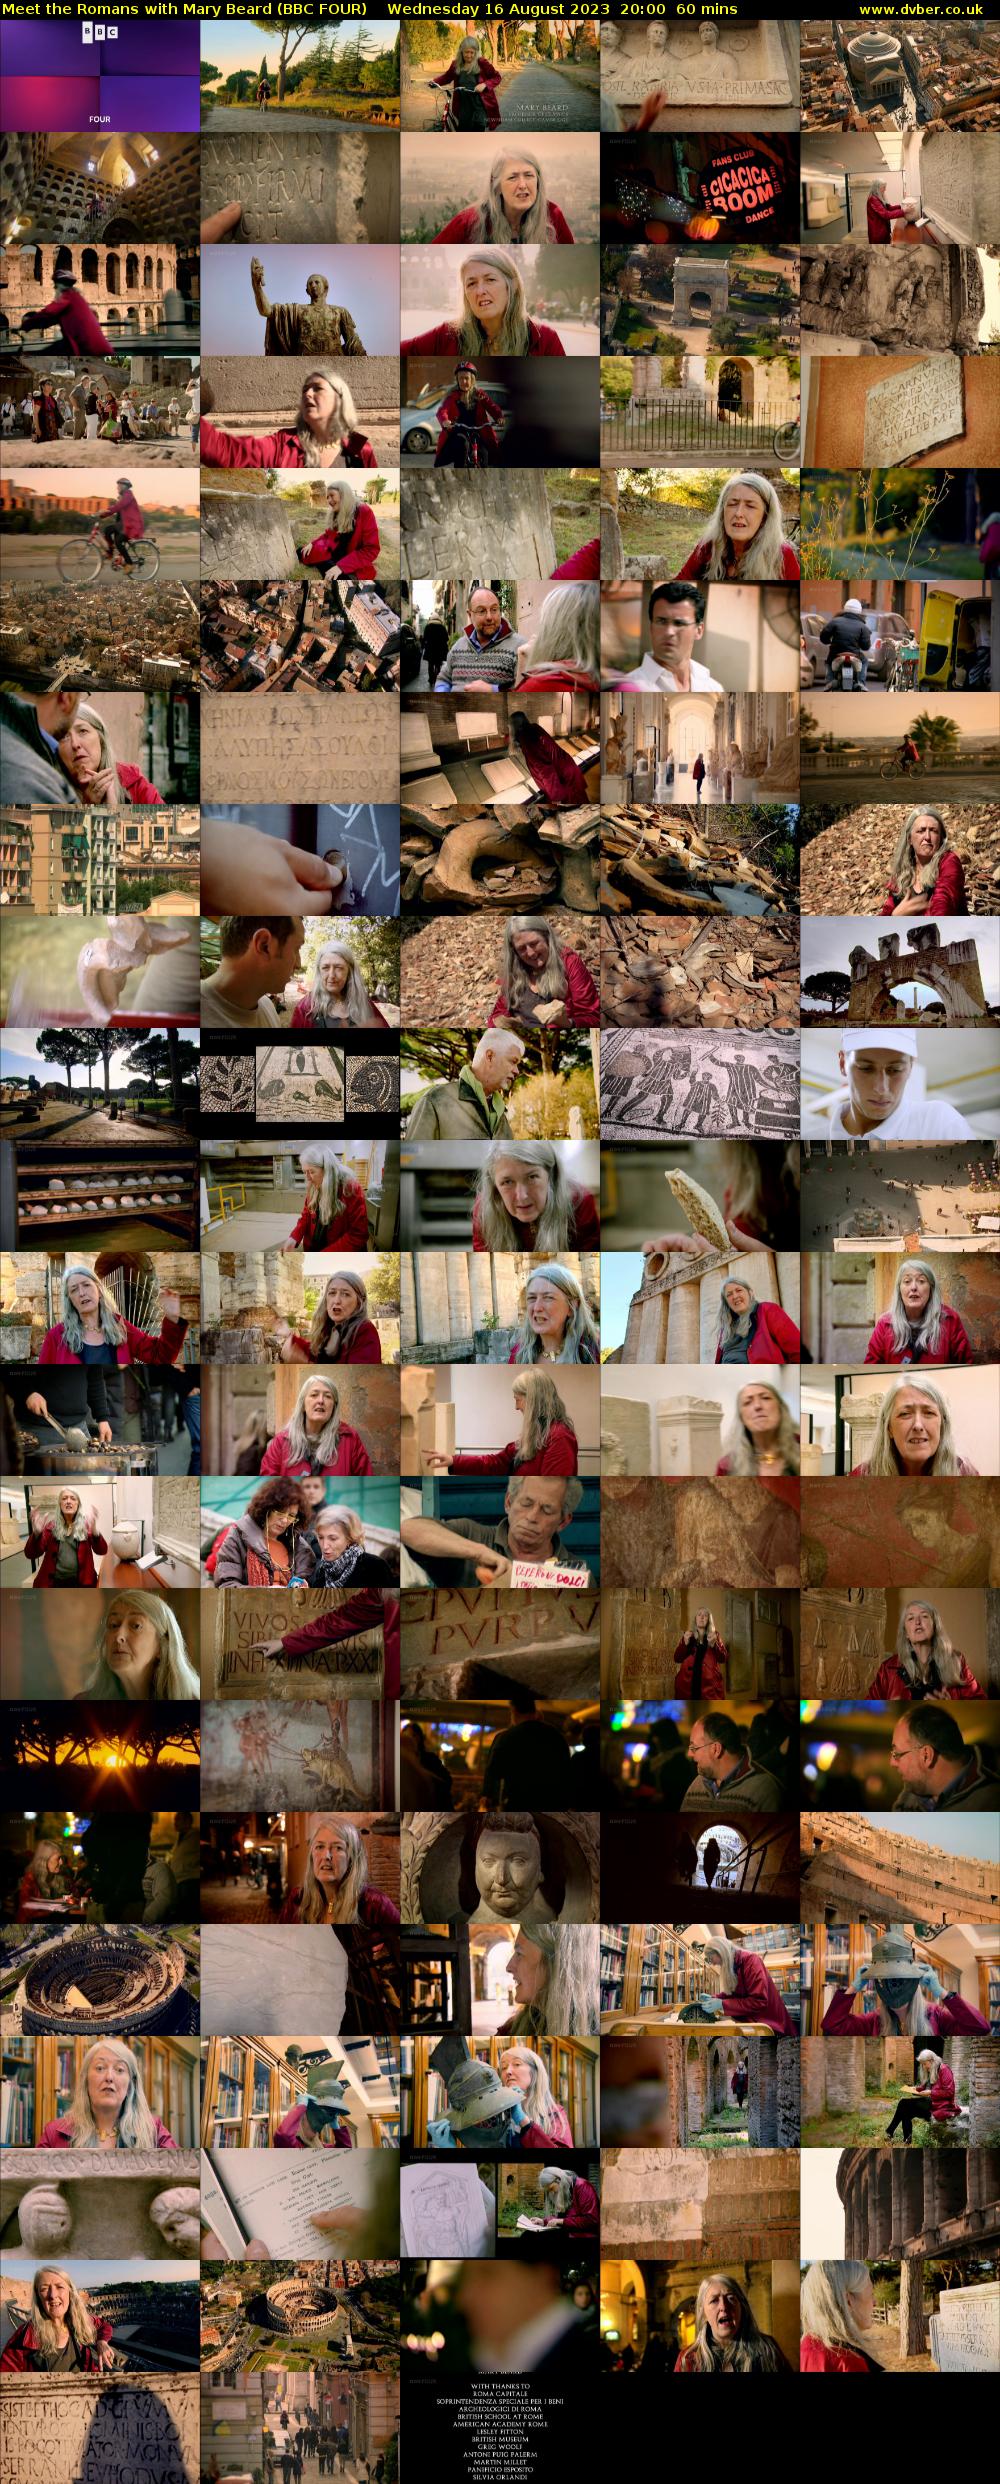 Meet the Romans with Mary Beard (BBC FOUR) Wednesday 16 August 2023 20:00 - 21:00